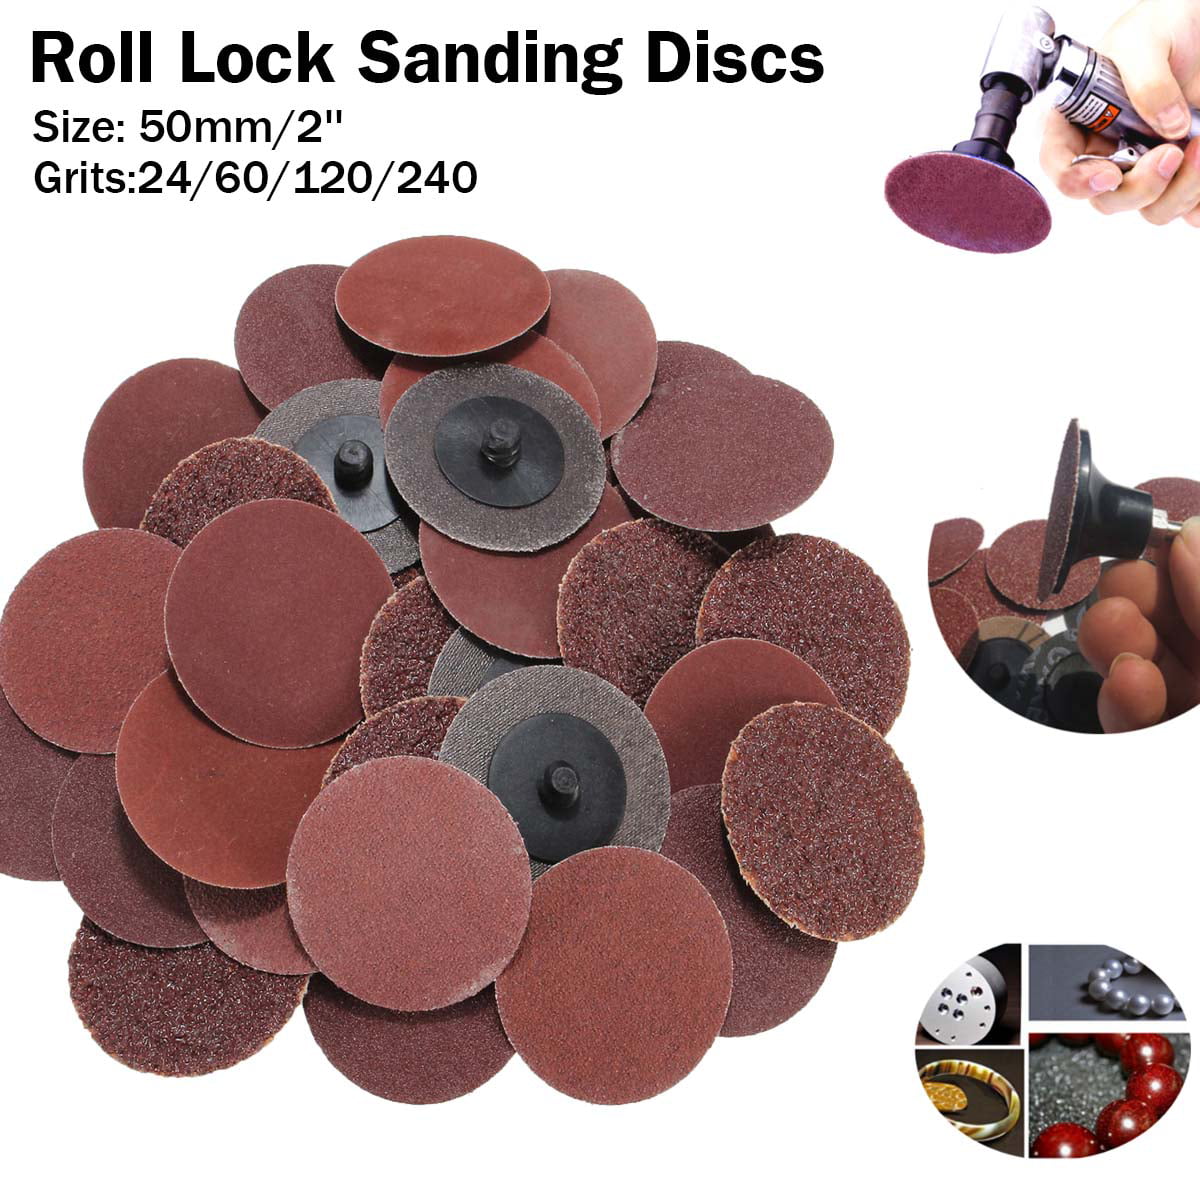 40Pcs/Set 24 60 120 240 Grit 2'' Roll Lock Sanding Disc Roloc Abrasive 